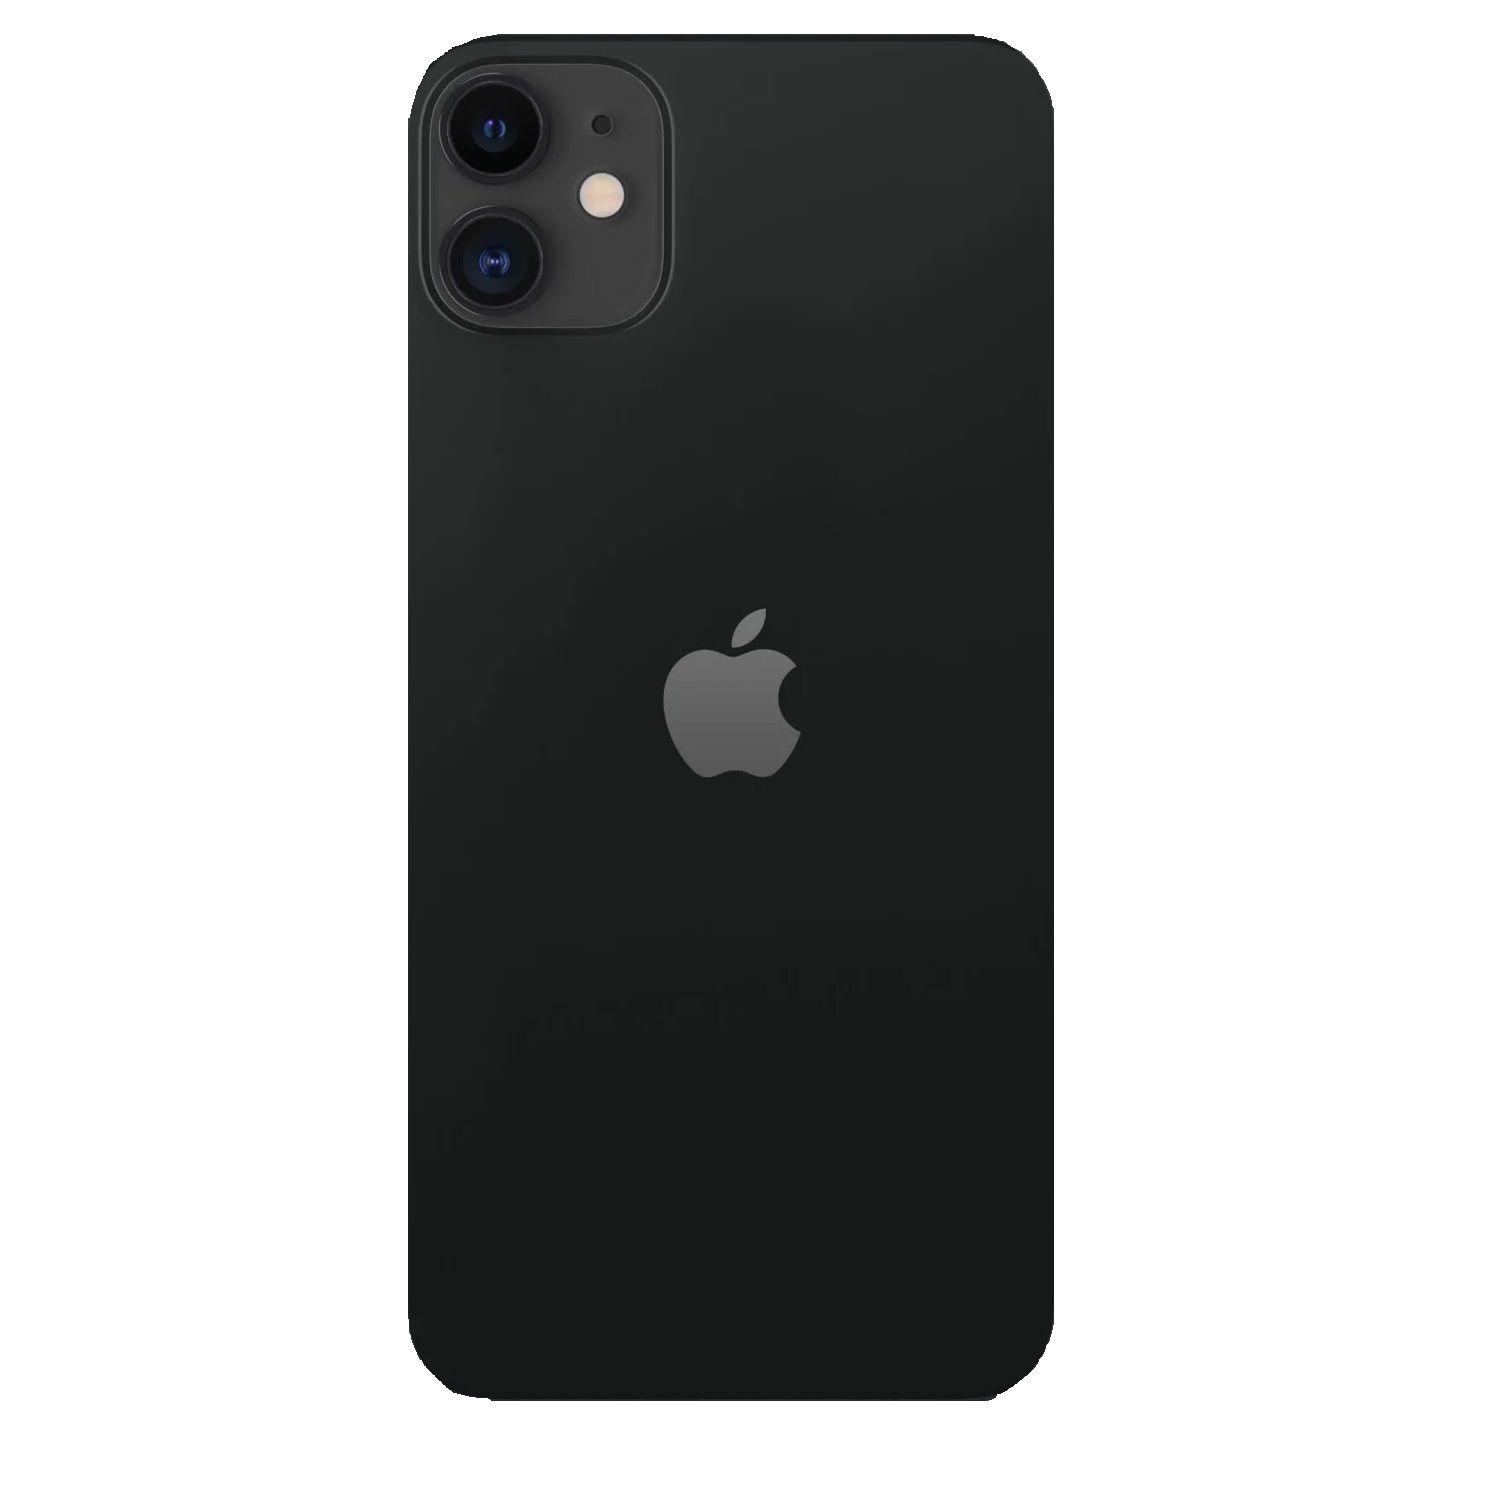 Kryt baterie iPhone 11 černý + sklíčko fotoaparátu